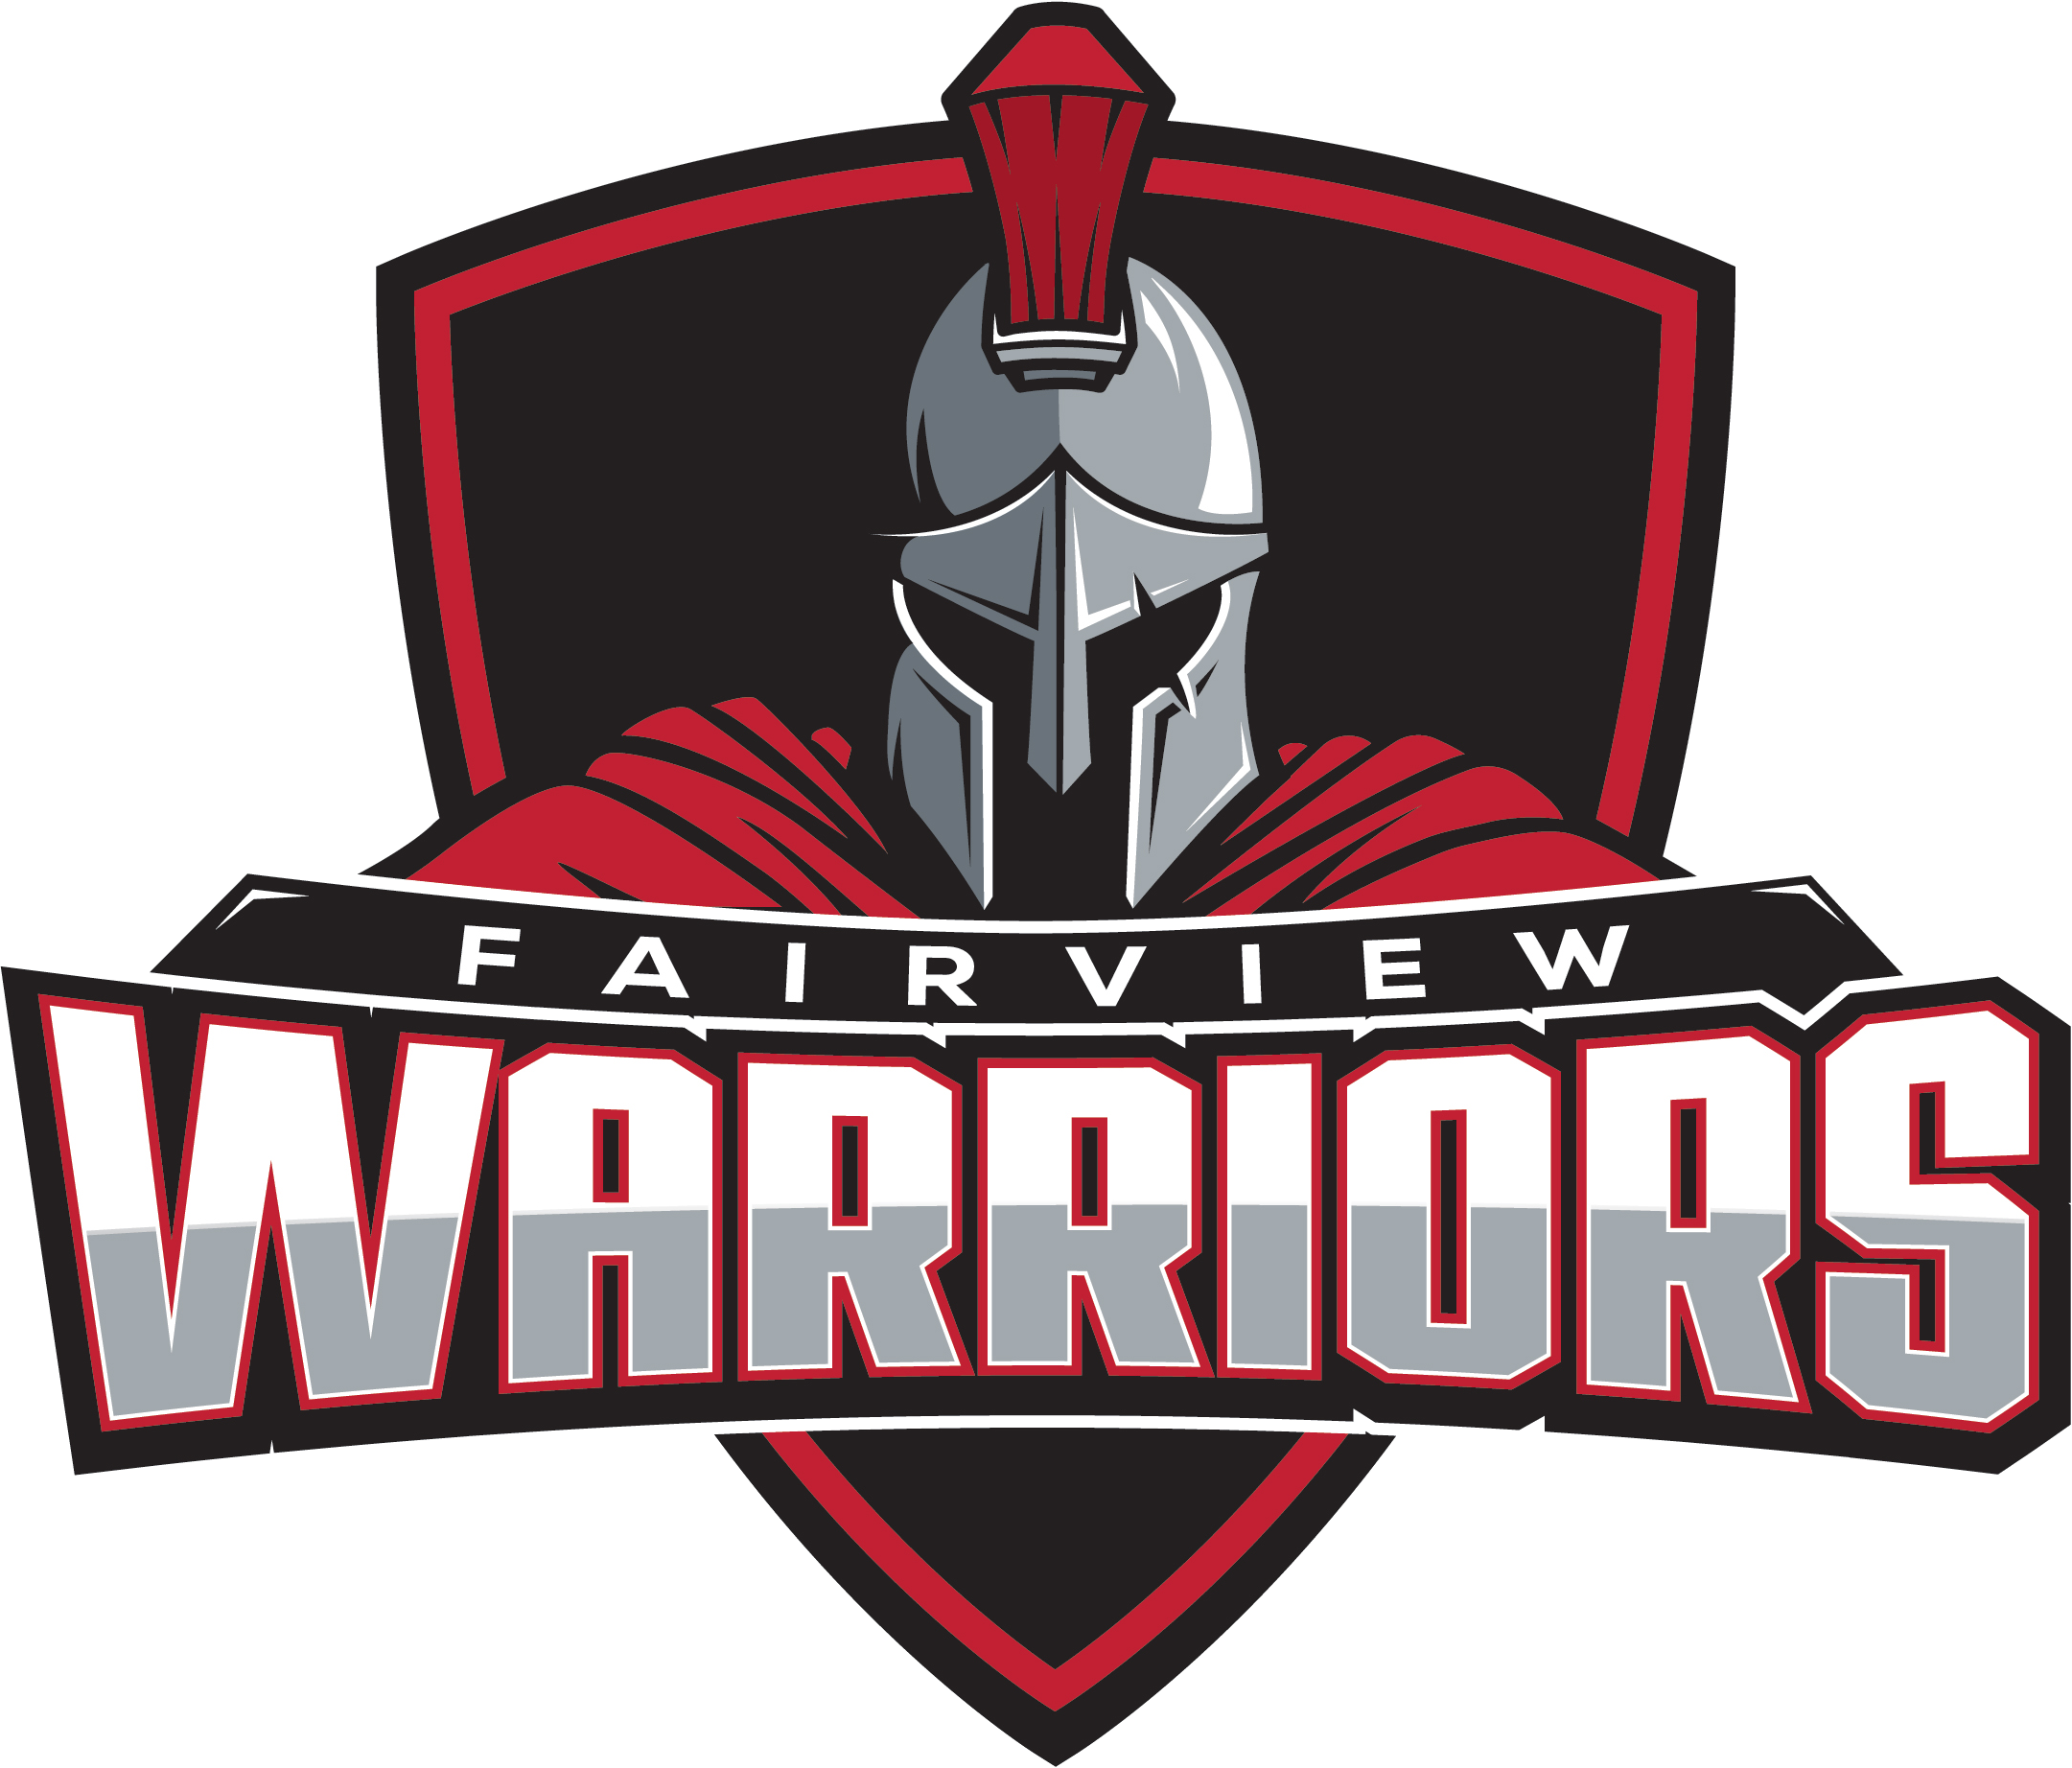 Fairview Warriors logo